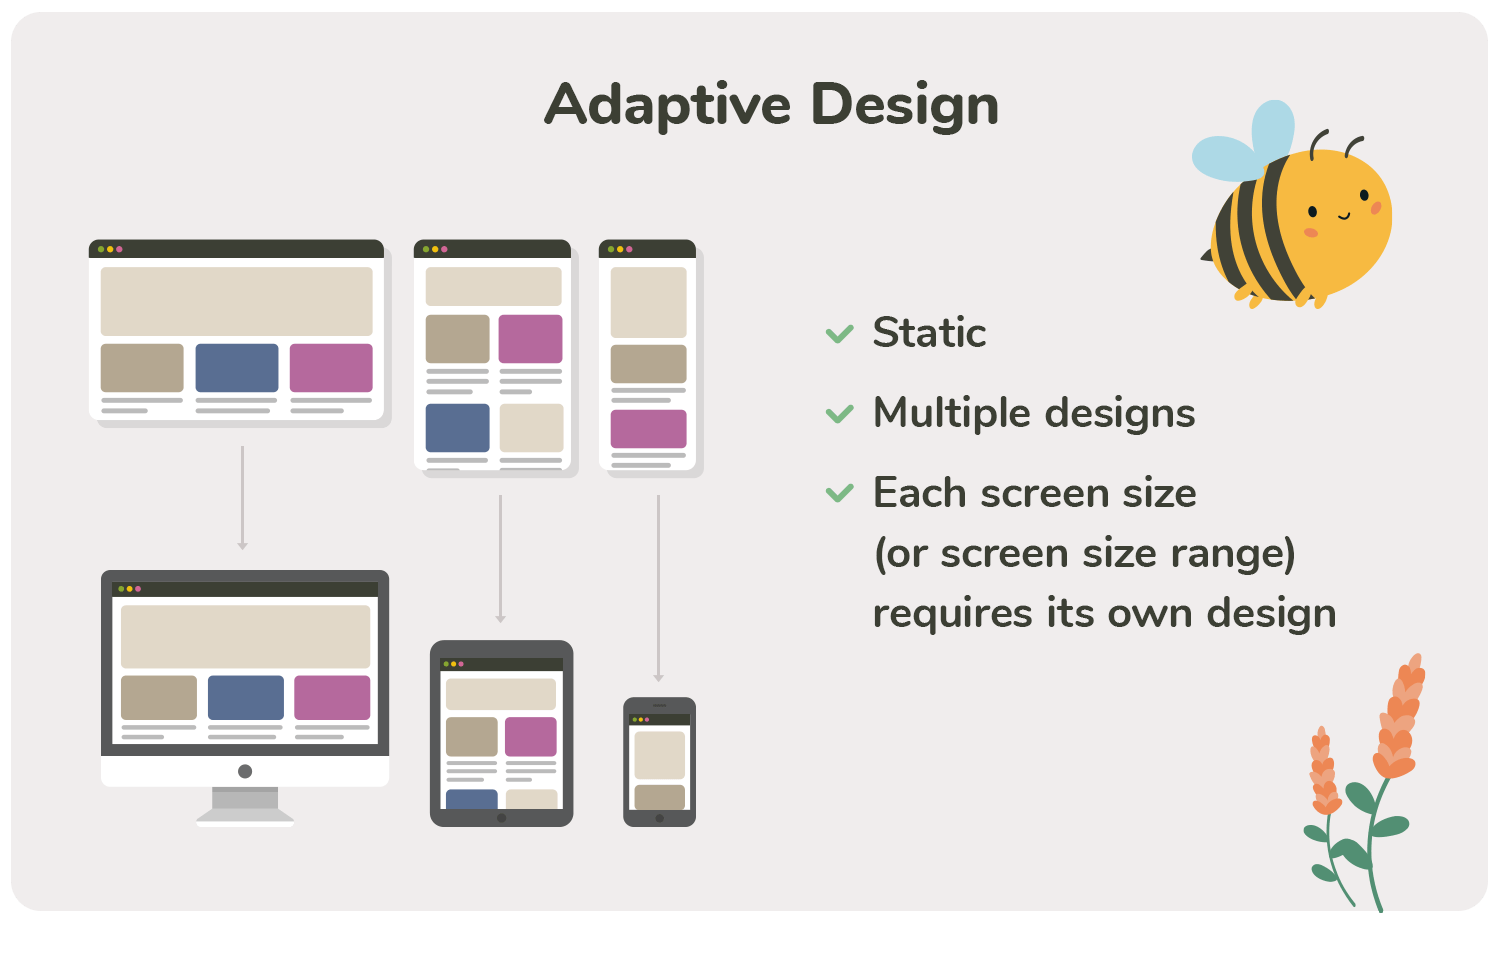 Adaptive web design